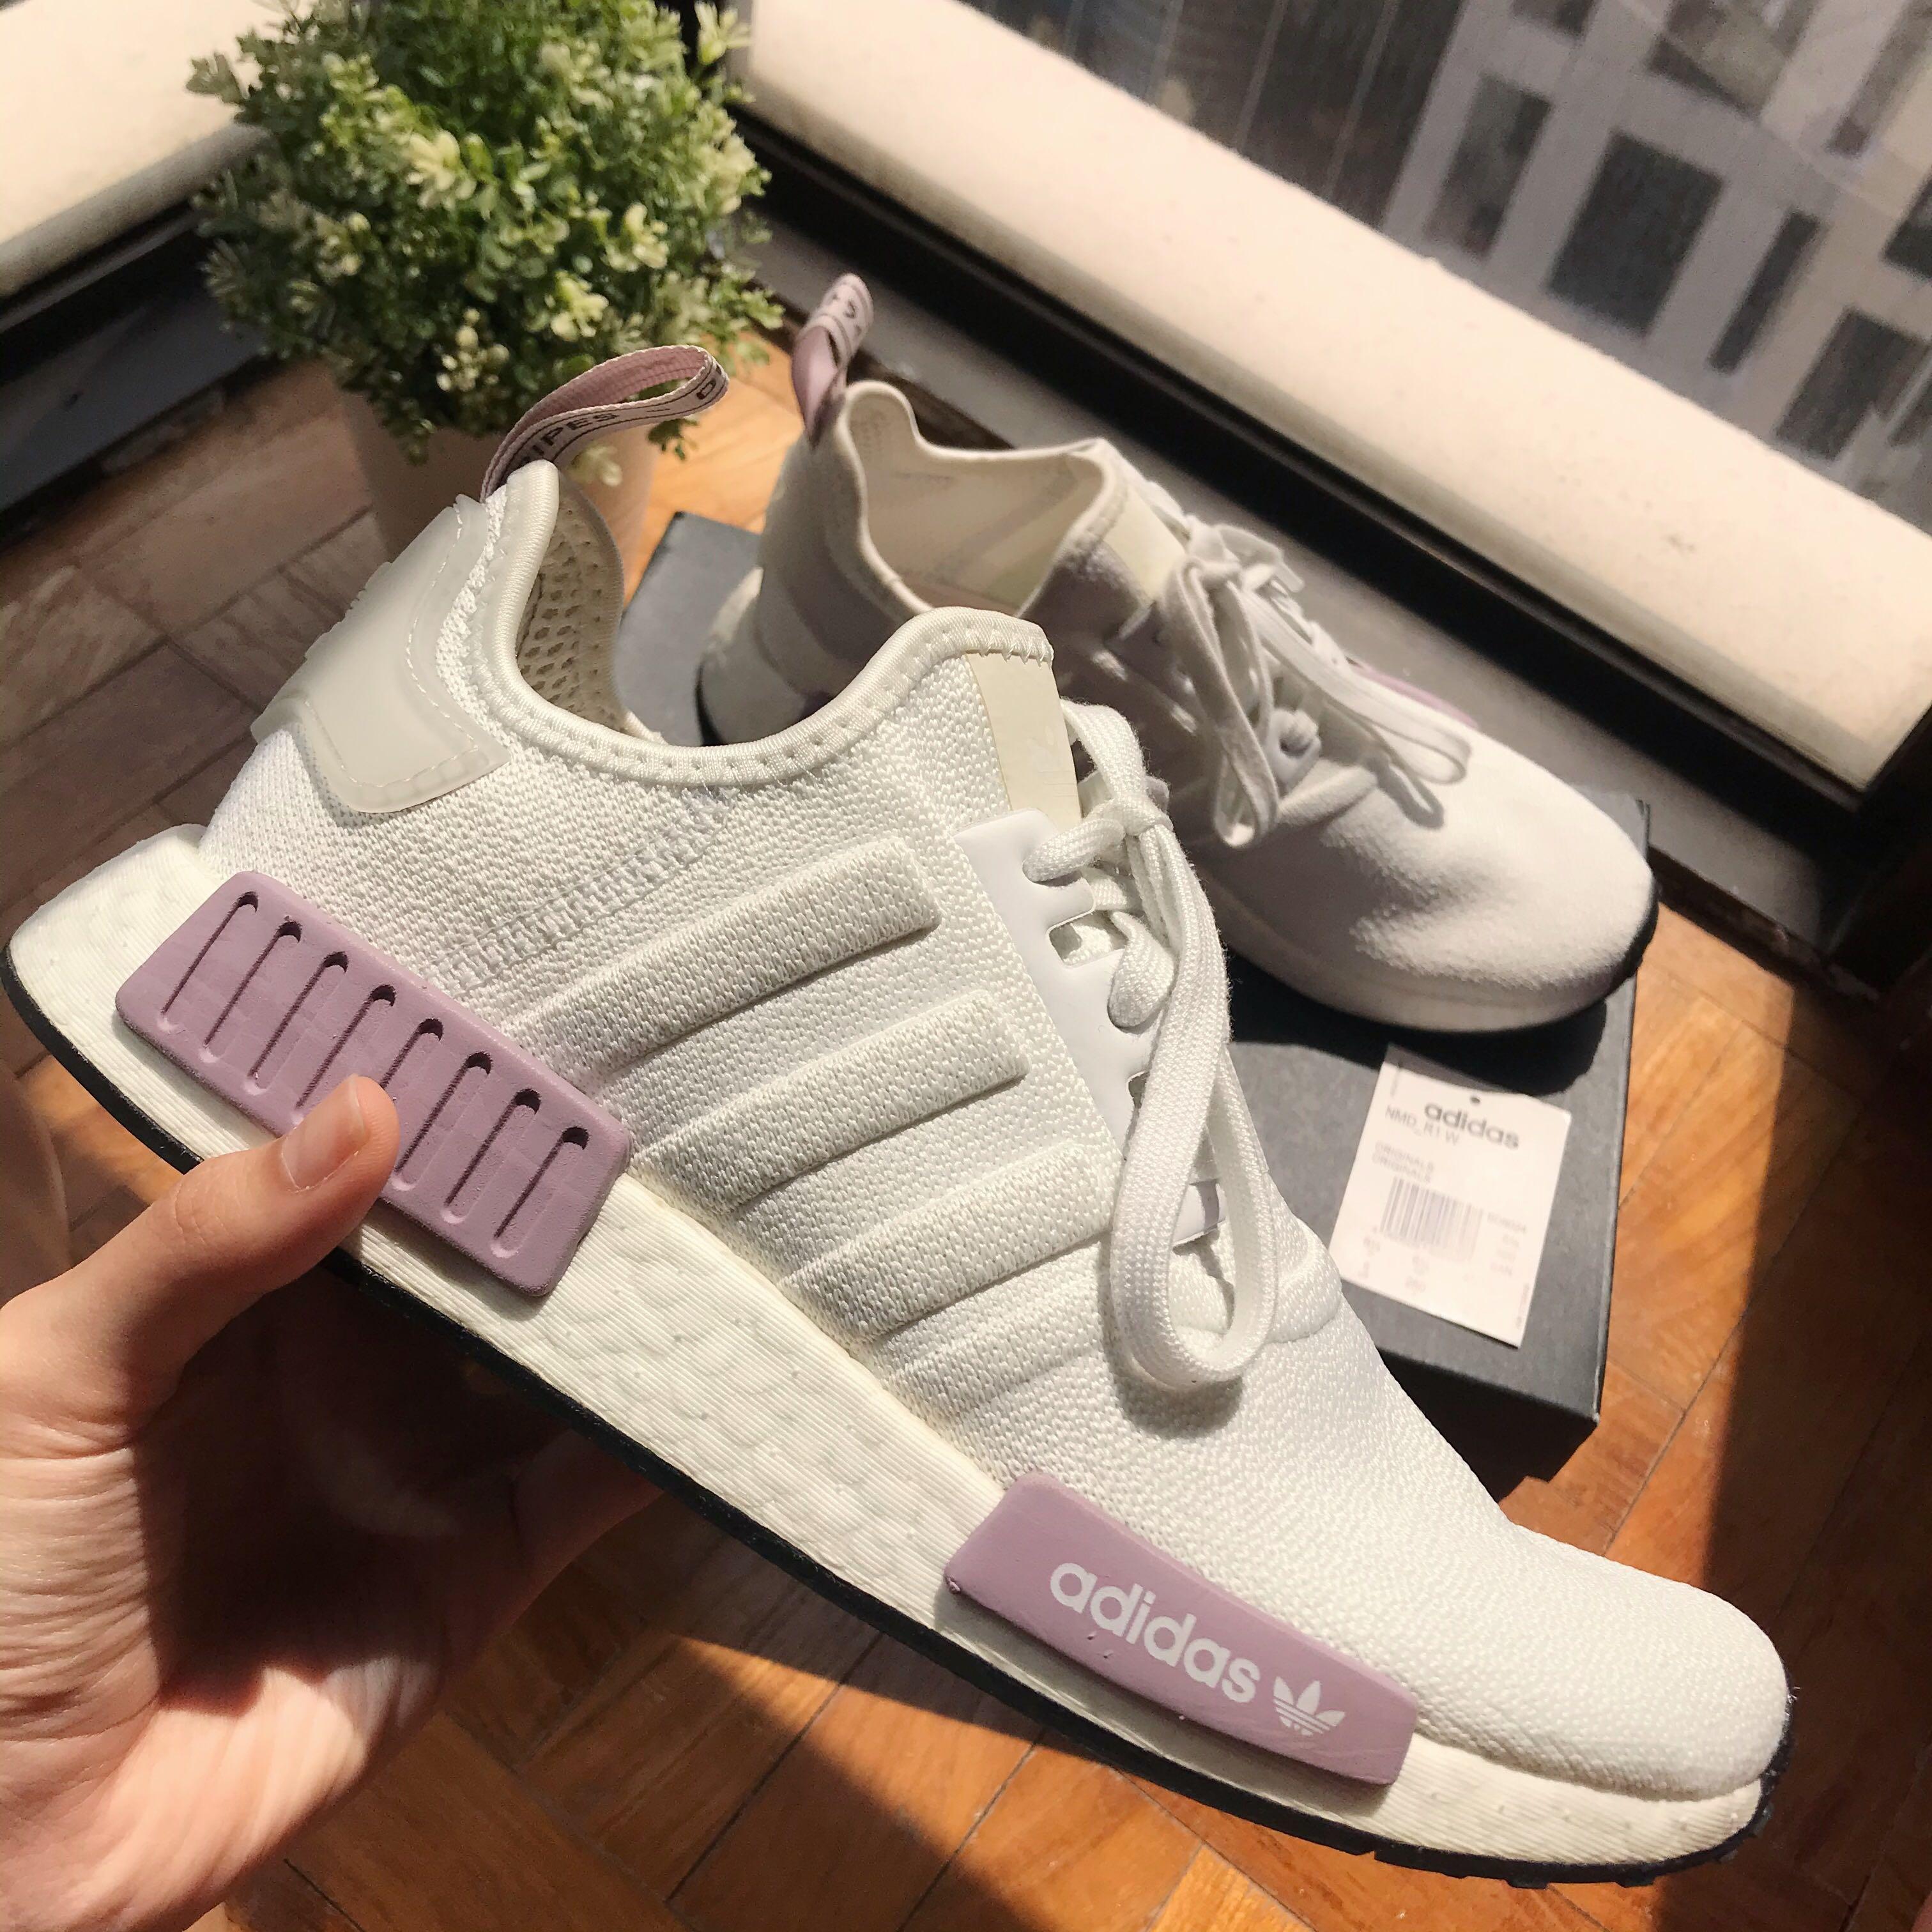 adidas nmd r1 white and purple